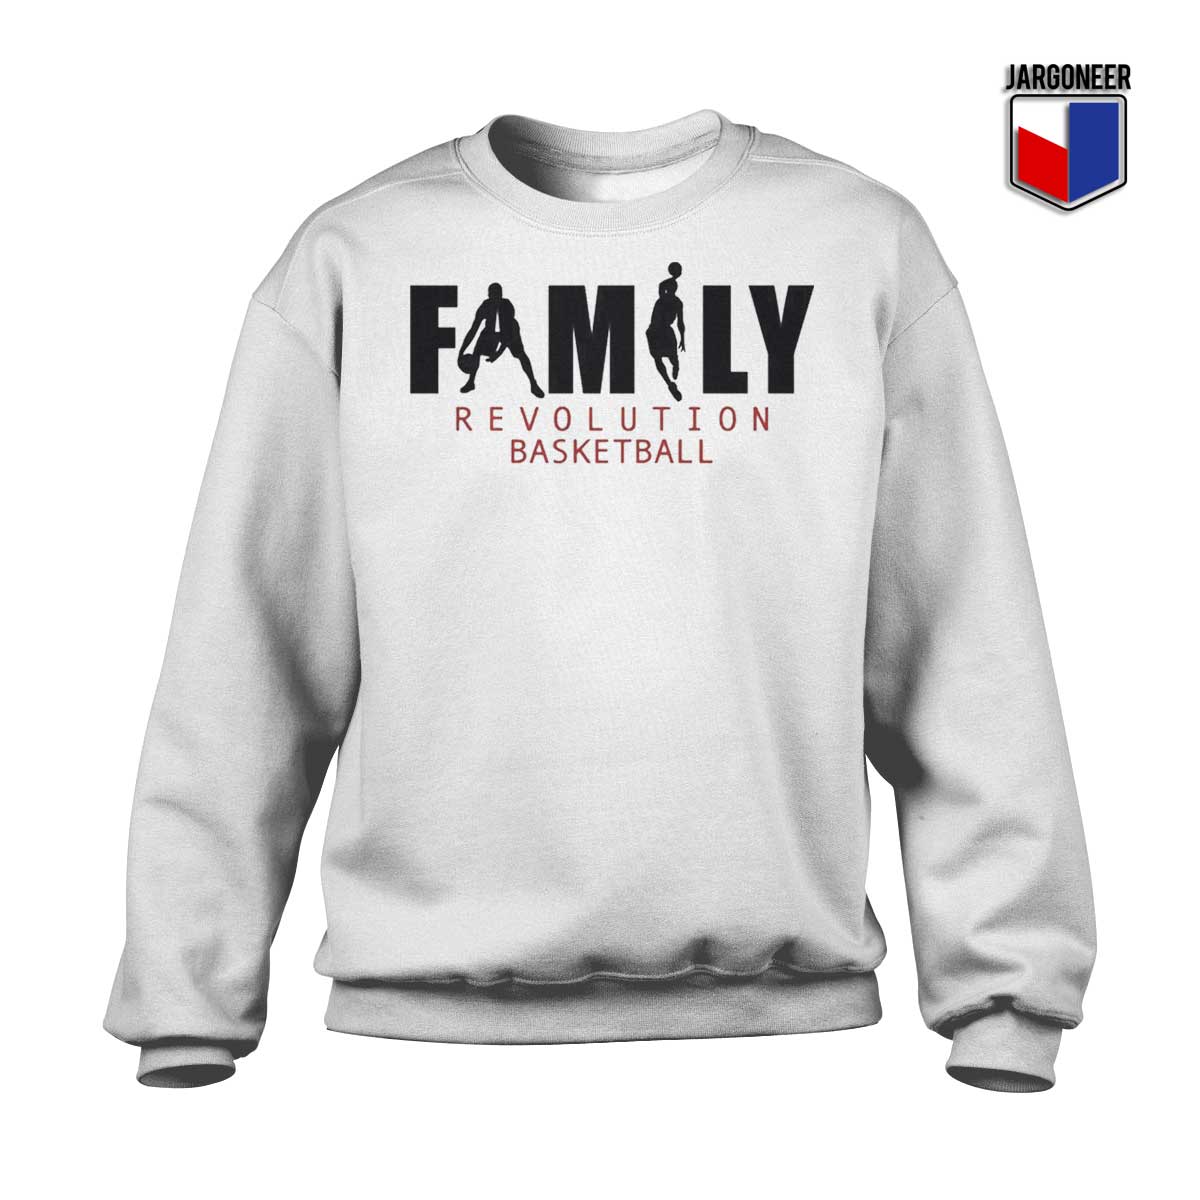 Family Revolution Basketball Sweatshirt - Shop Unique Graphic Cool Shirt Designs